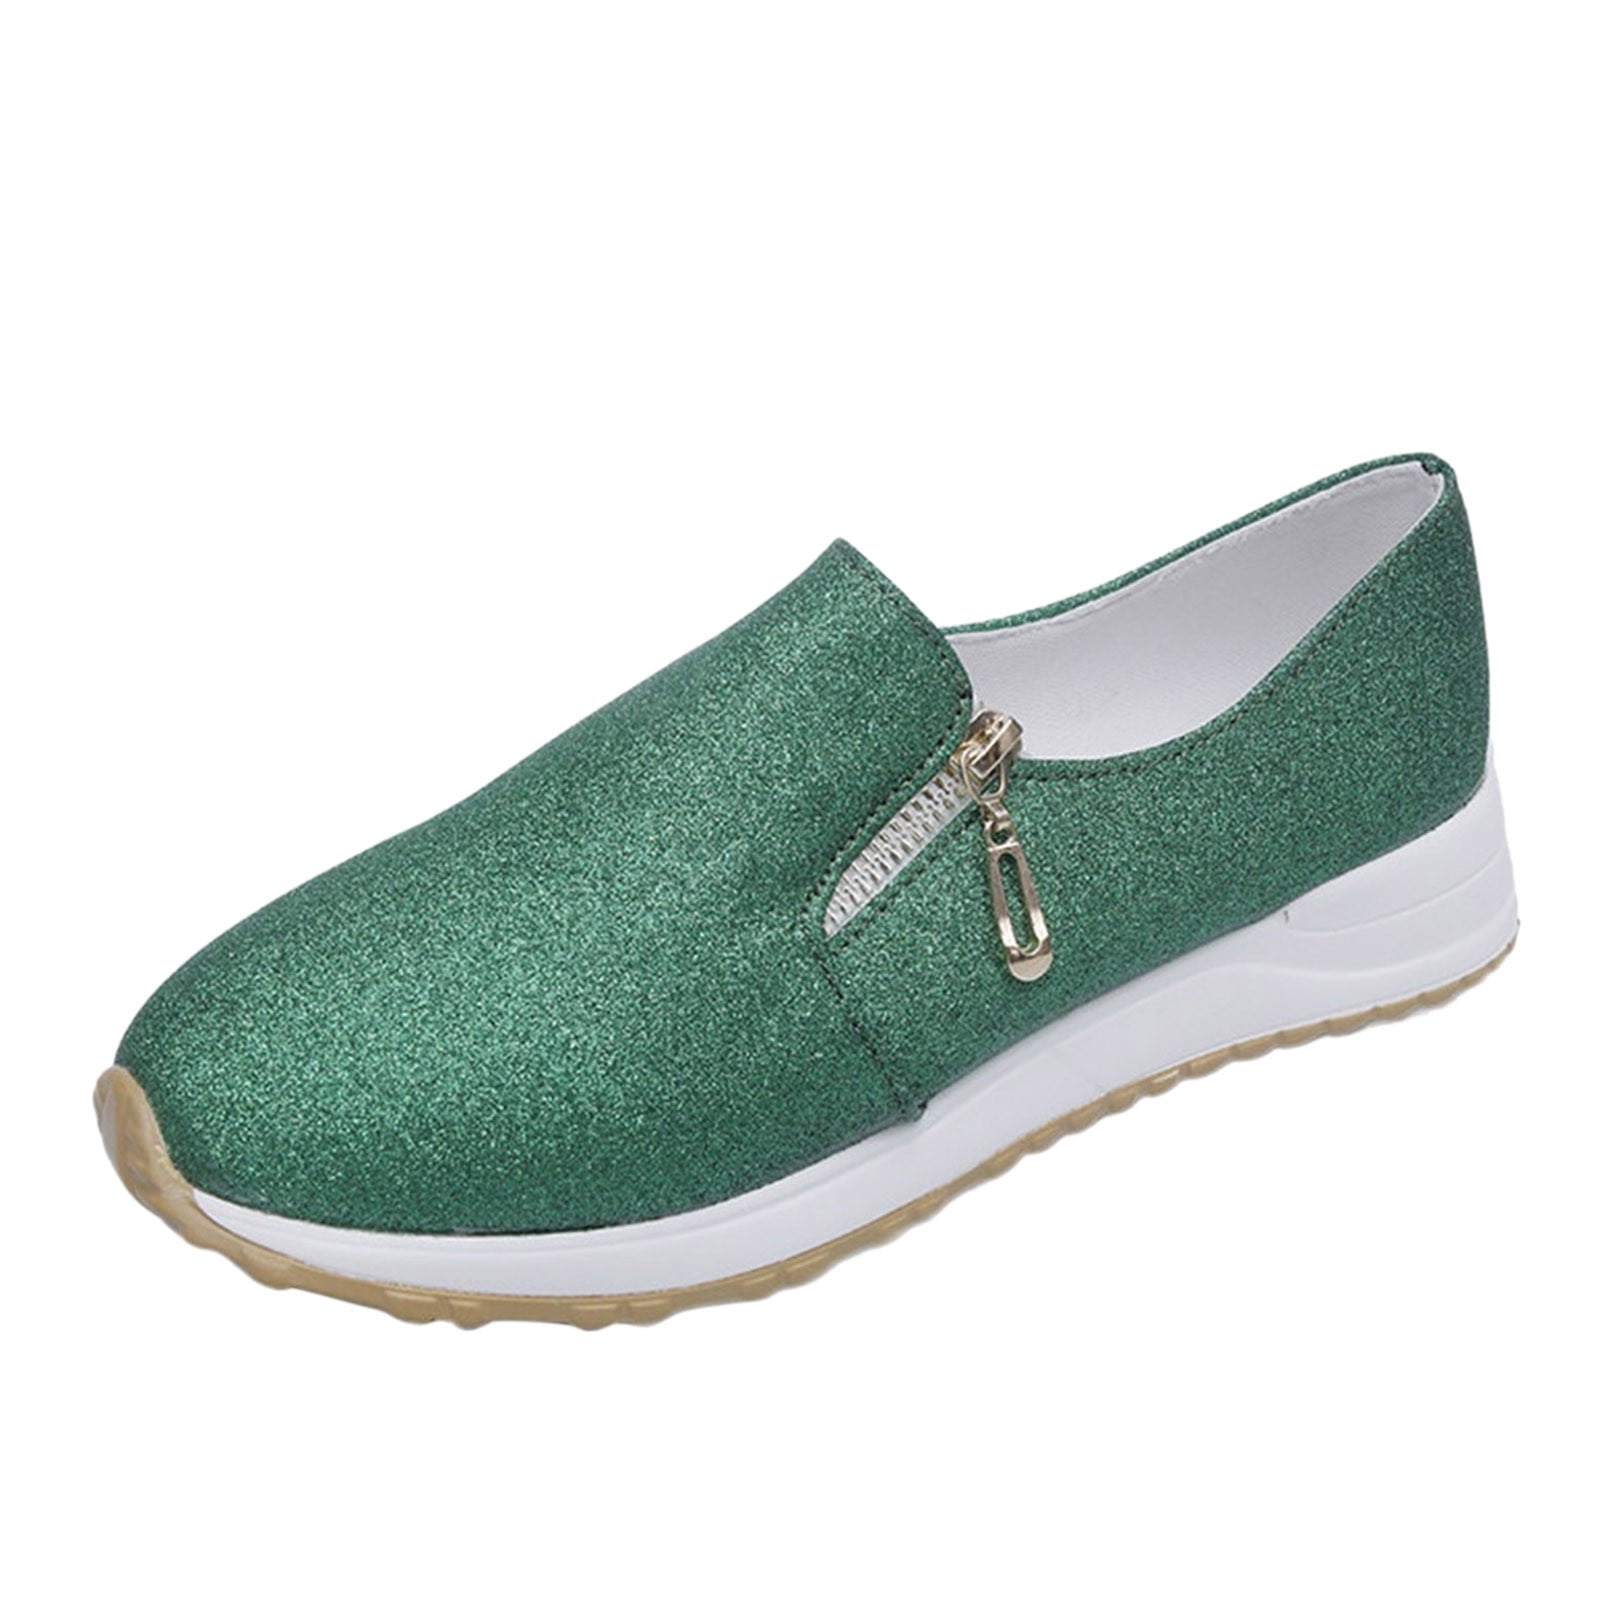 TOWED22 Women's Flats Shoes Comfortable Memory Foam Dress Shoes Slip On ...